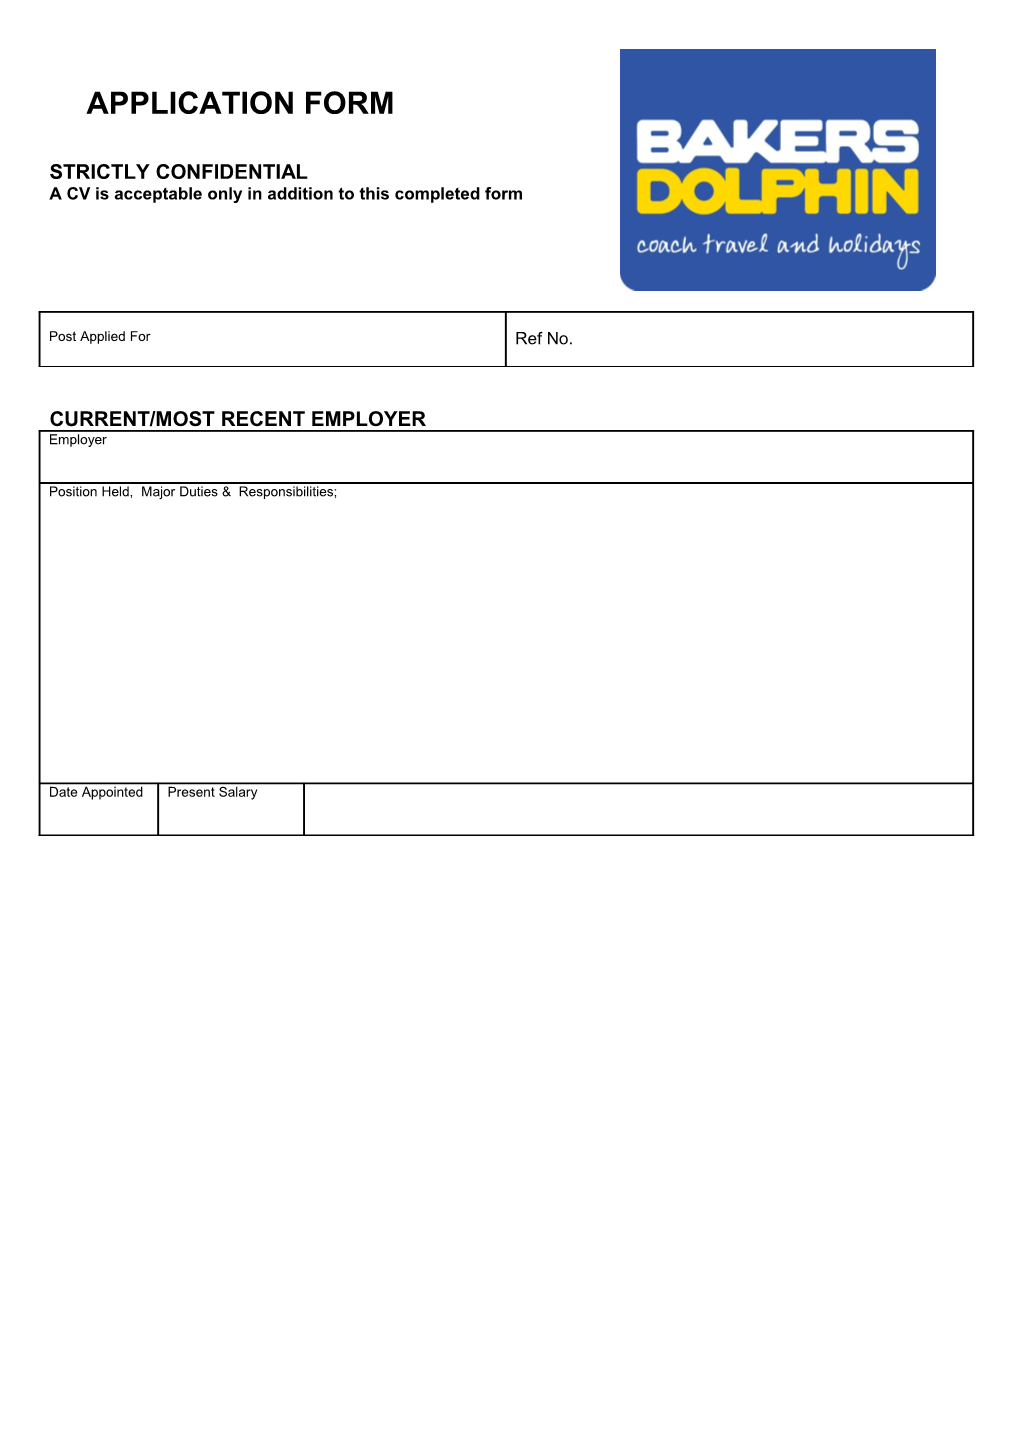 NDDC Job Application Form